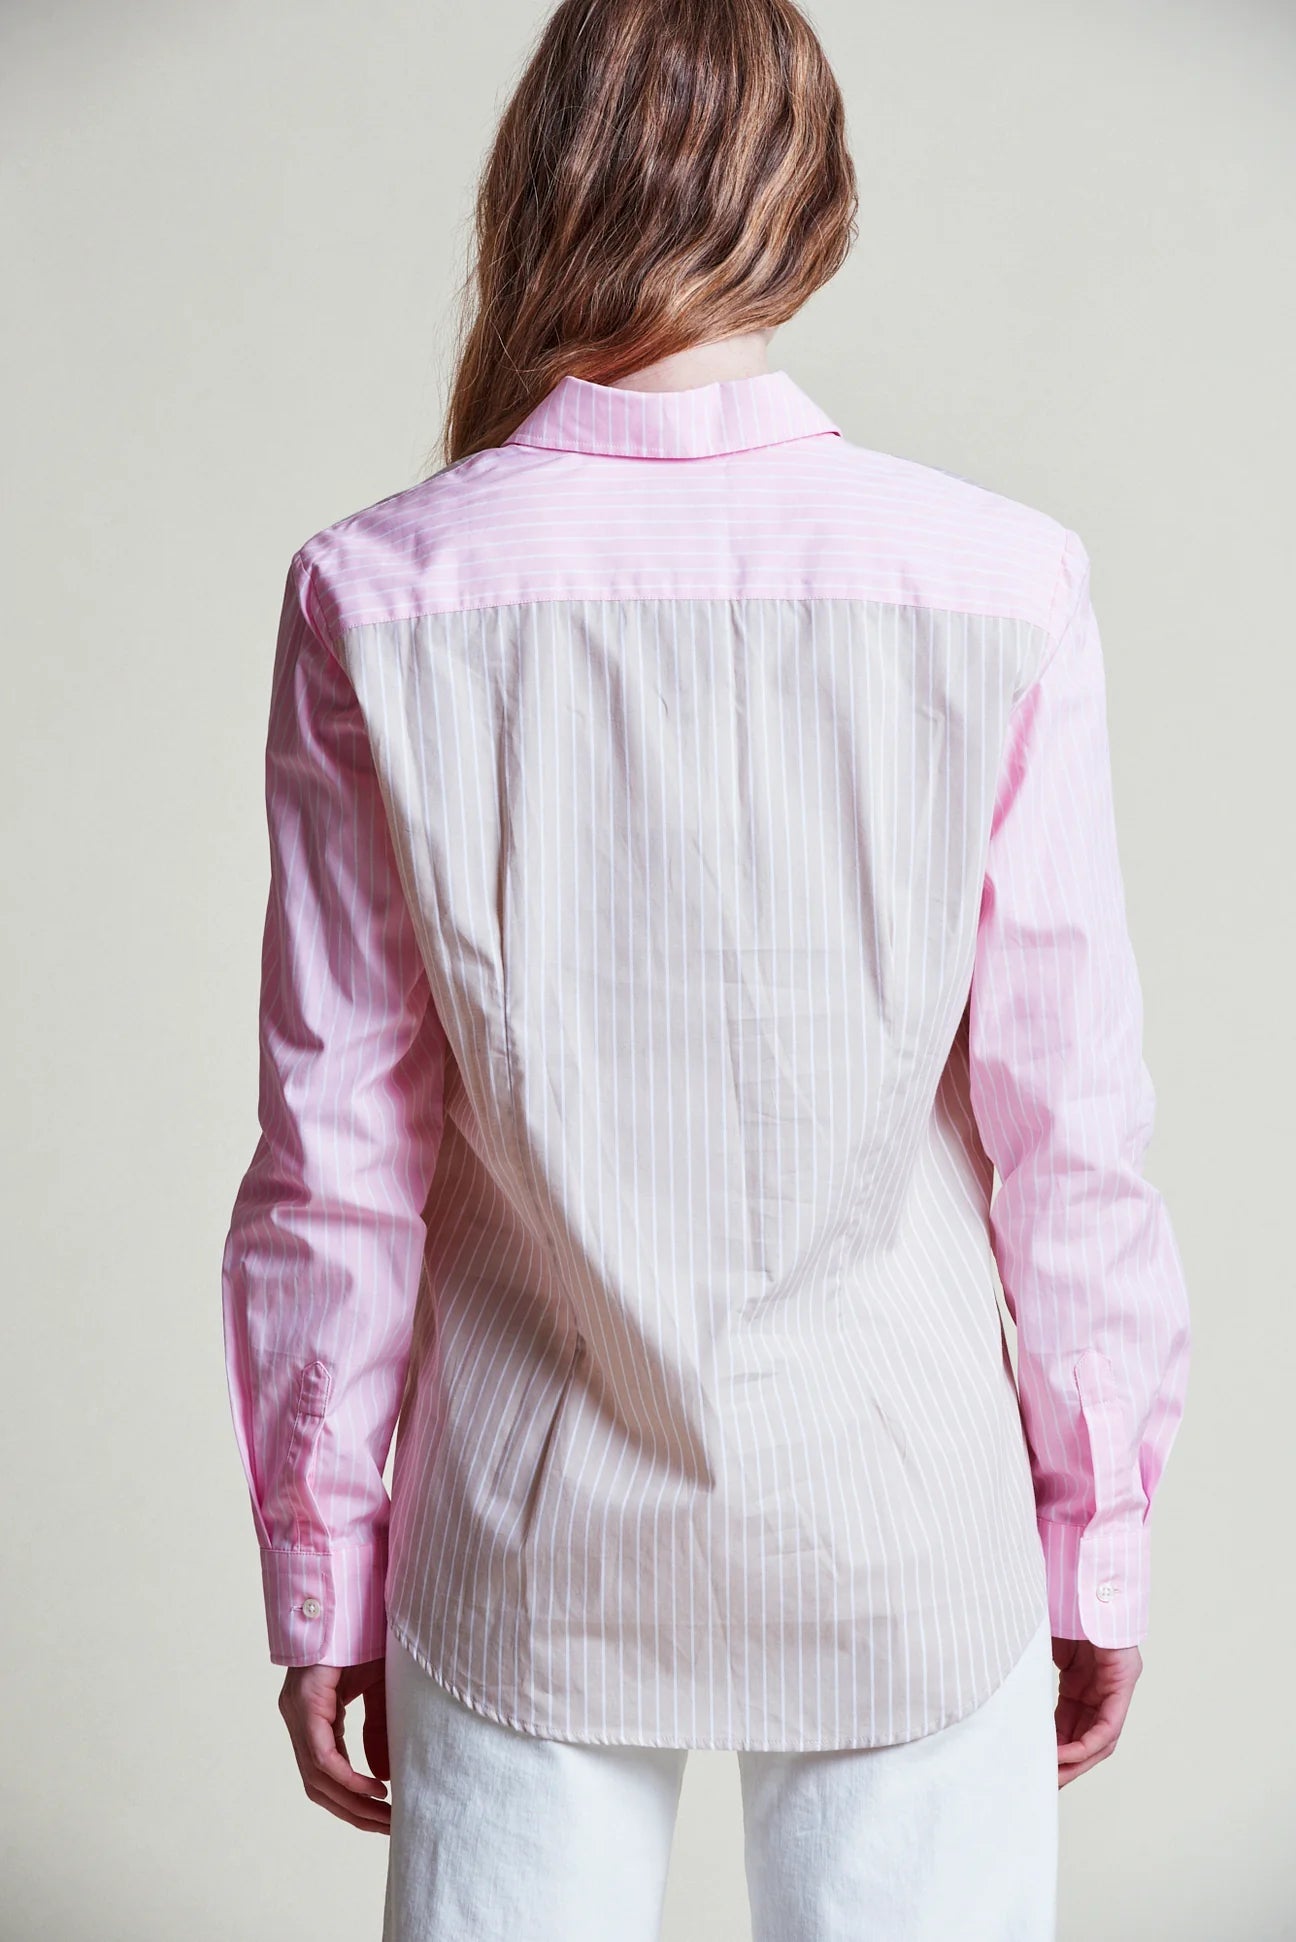 The Shirt The Boyfriend Shirt in Tan and Pink Stripe - Estilo Boutique